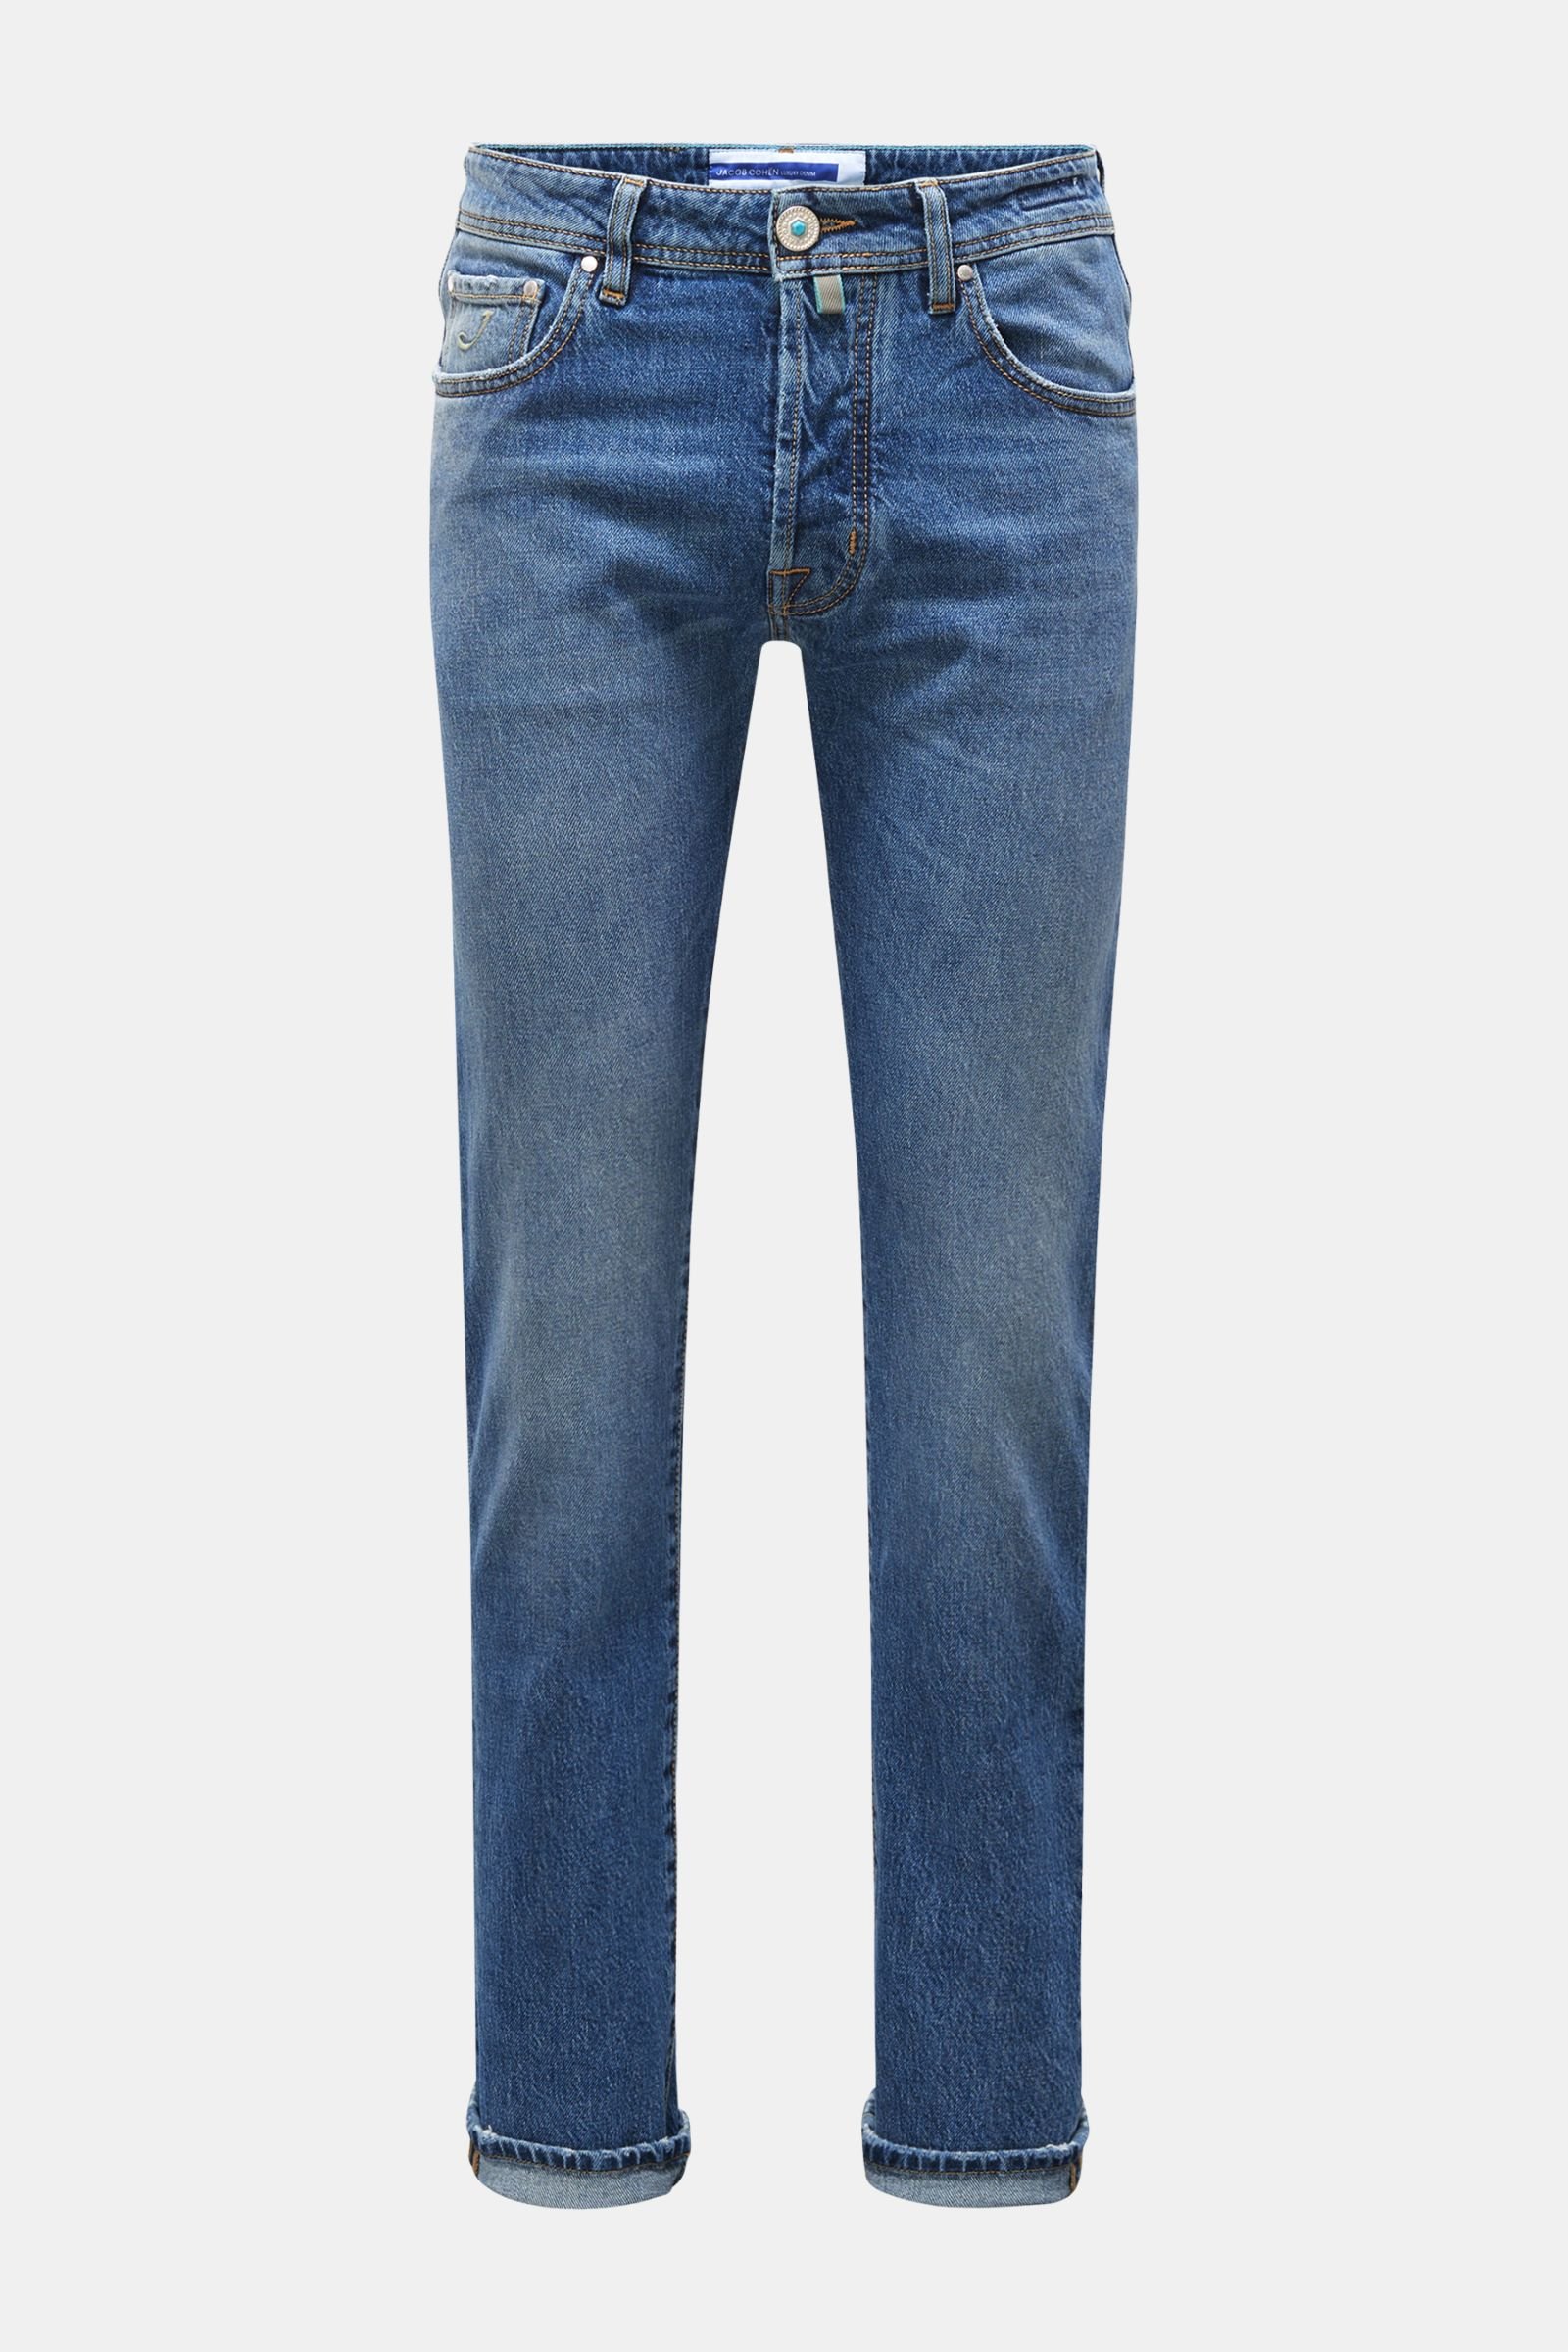 JACOB COHEN jeans 'Bard' grey-blue | BRAUN Hamburg